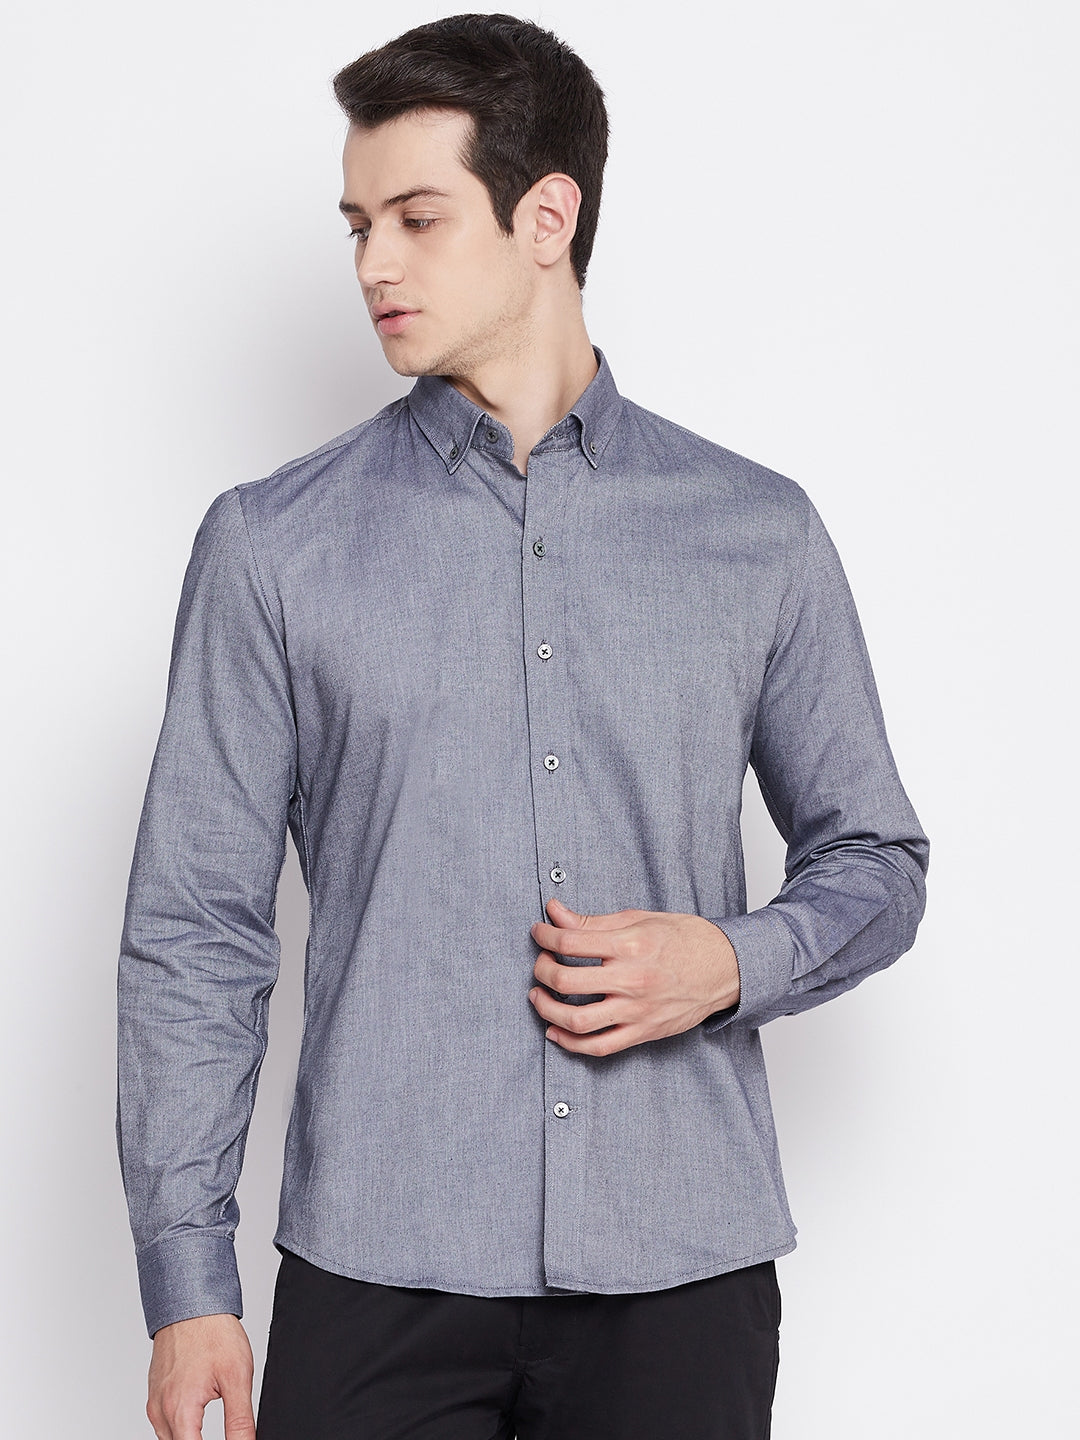 Steel Grey Oxford Cotton Shirt